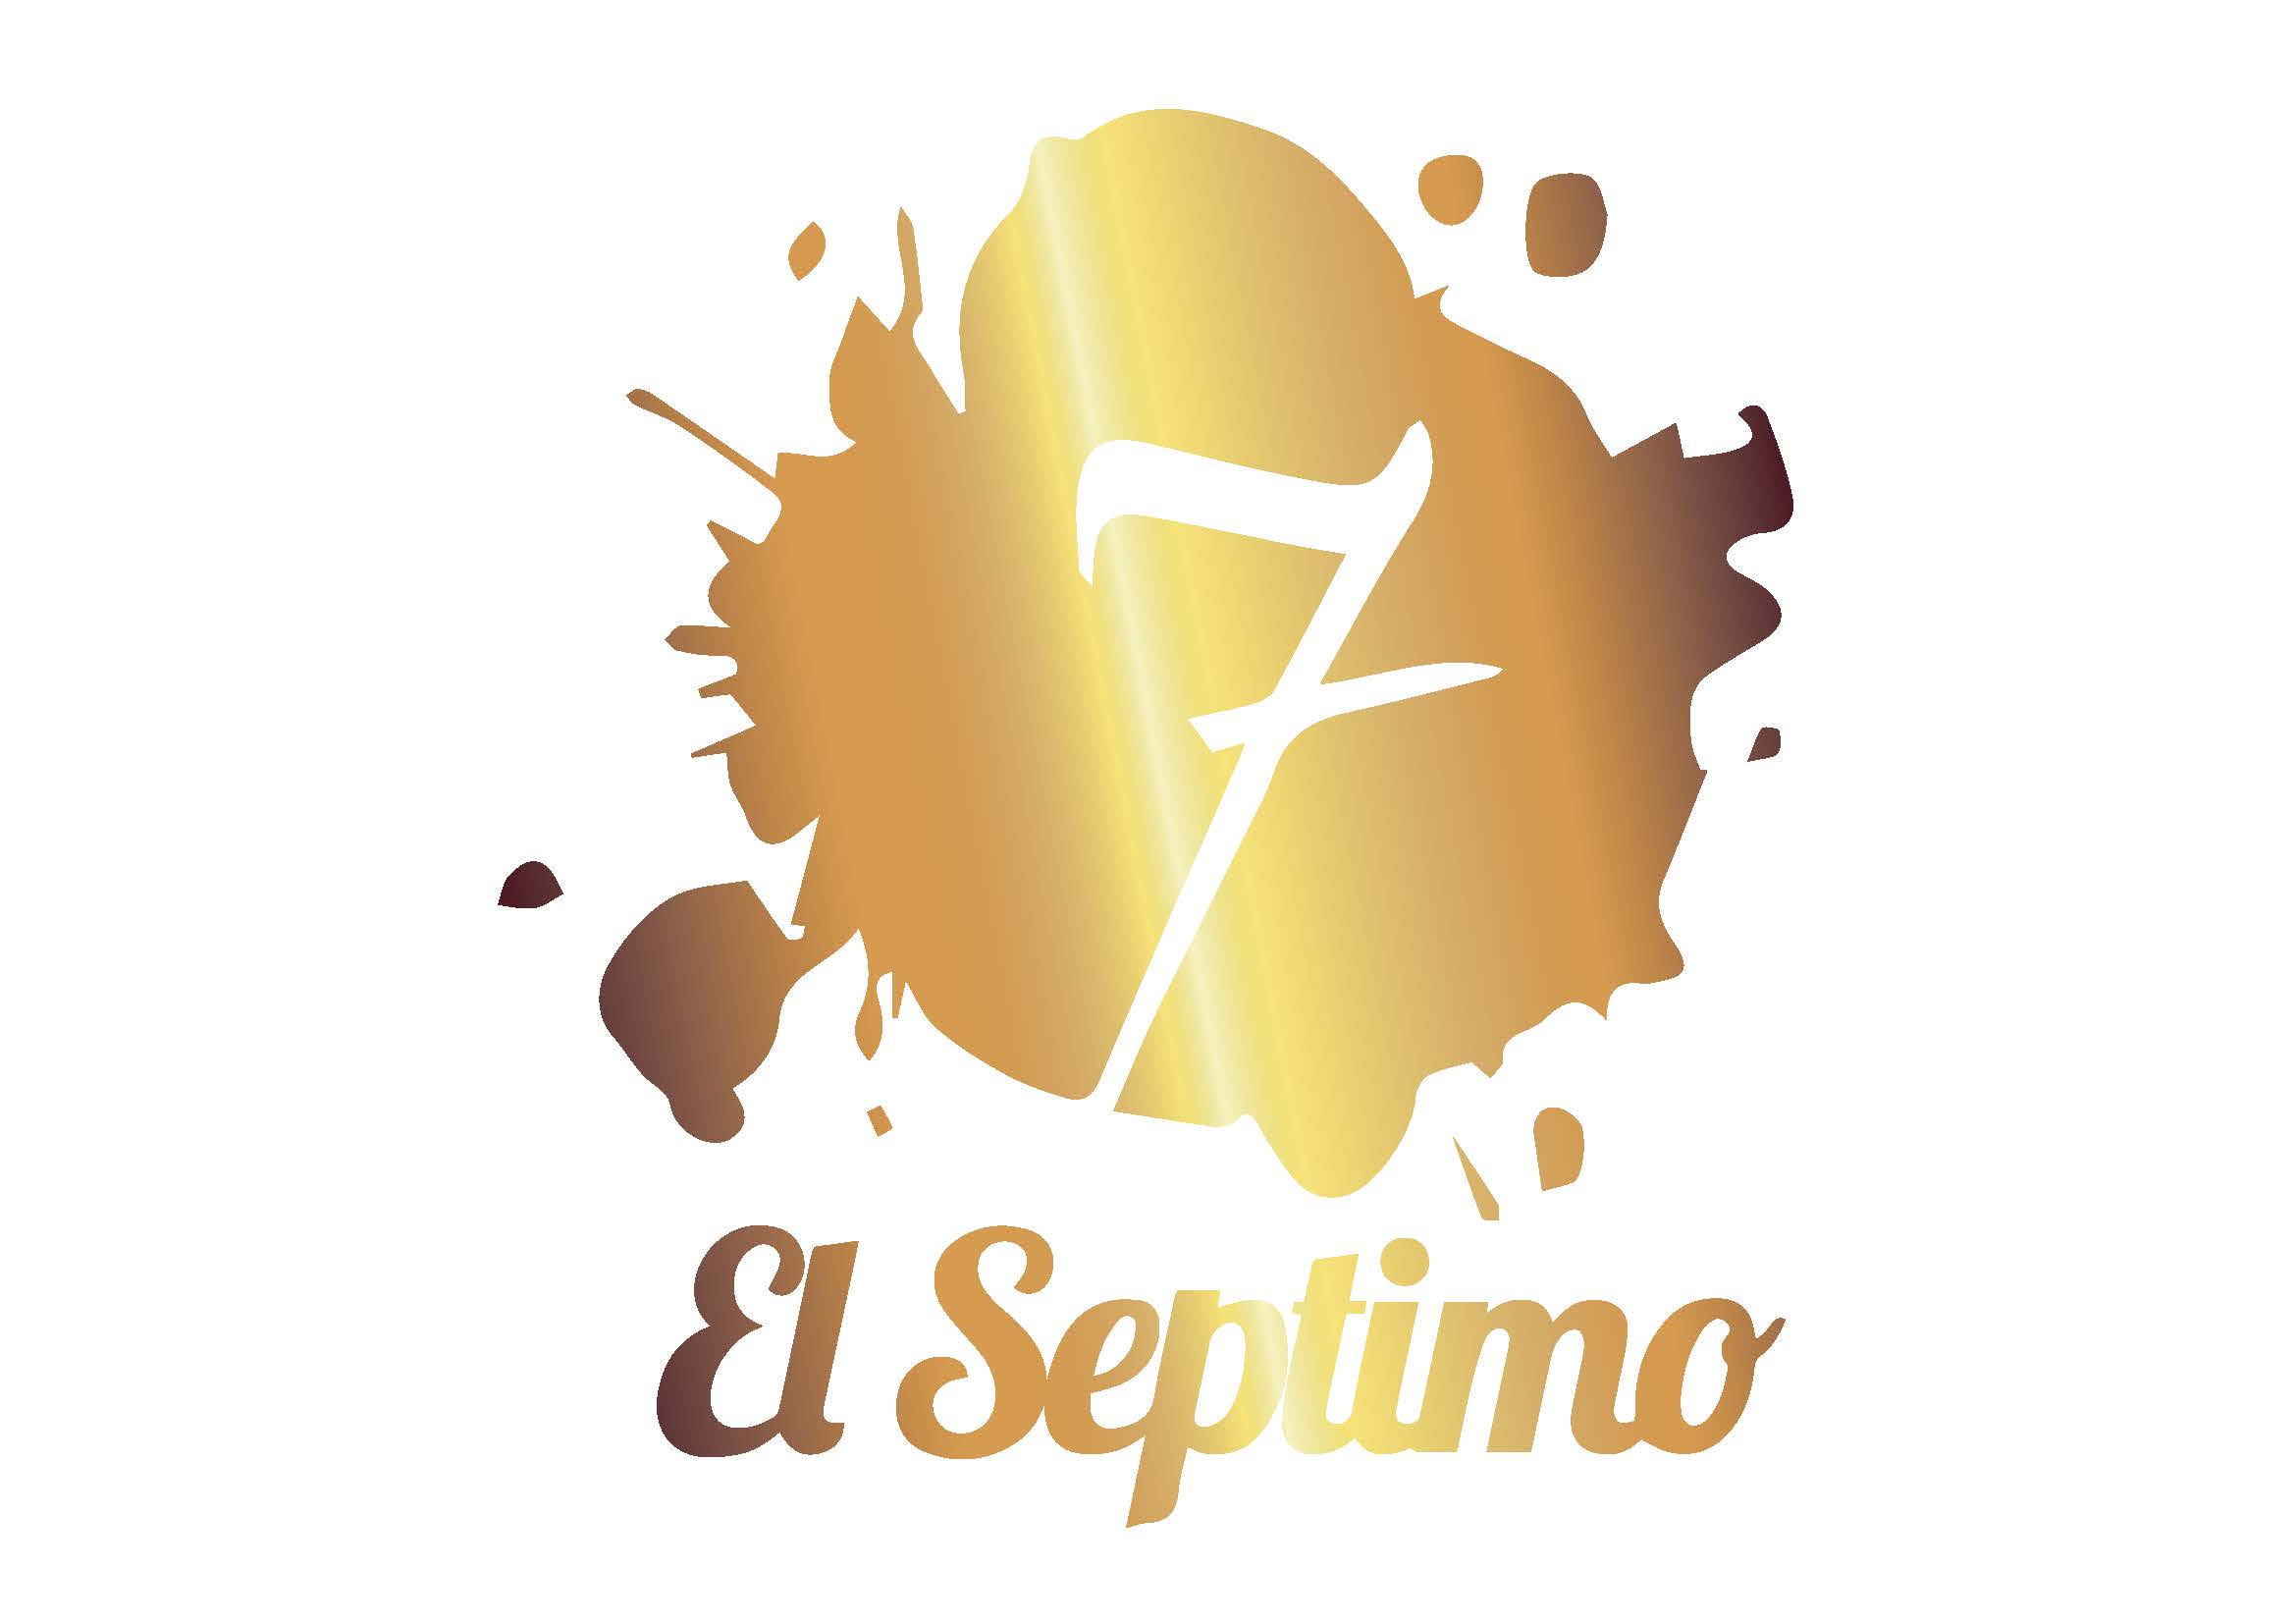 el septimo logo_gold_white